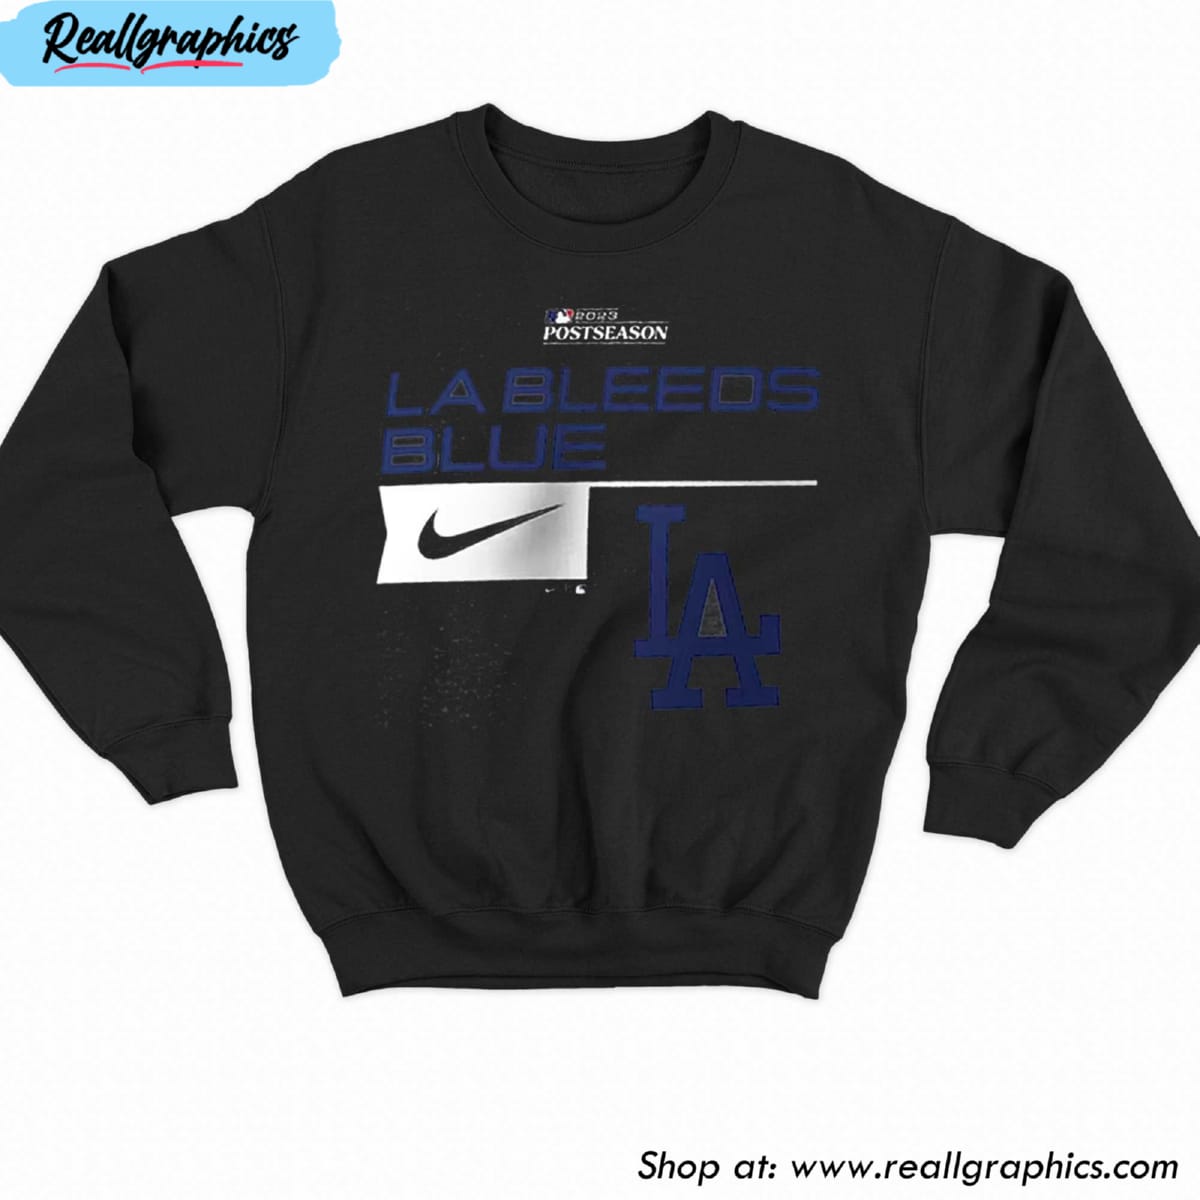 Los Angeles Dodgers Nike La Bleed Blue Shirt